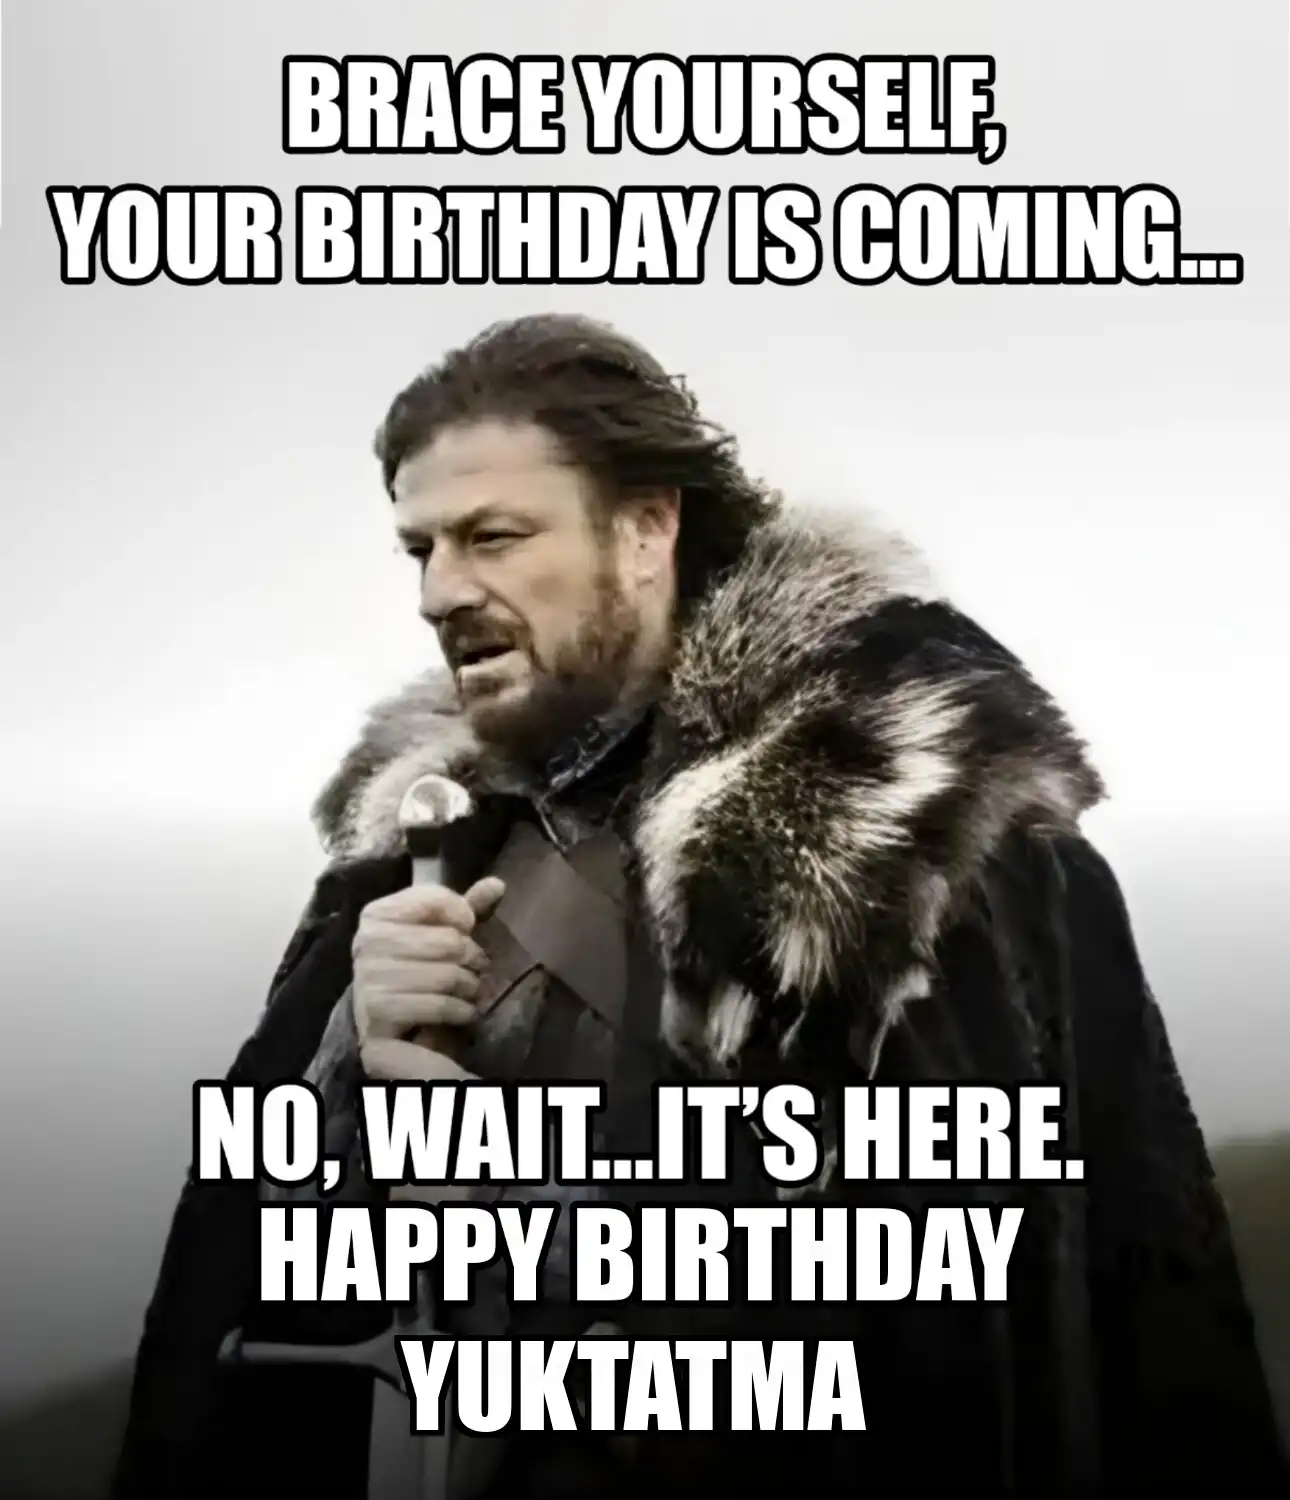 Happy Birthday Yuktatma Brace Yourself Your Birthday Is Coming Meme